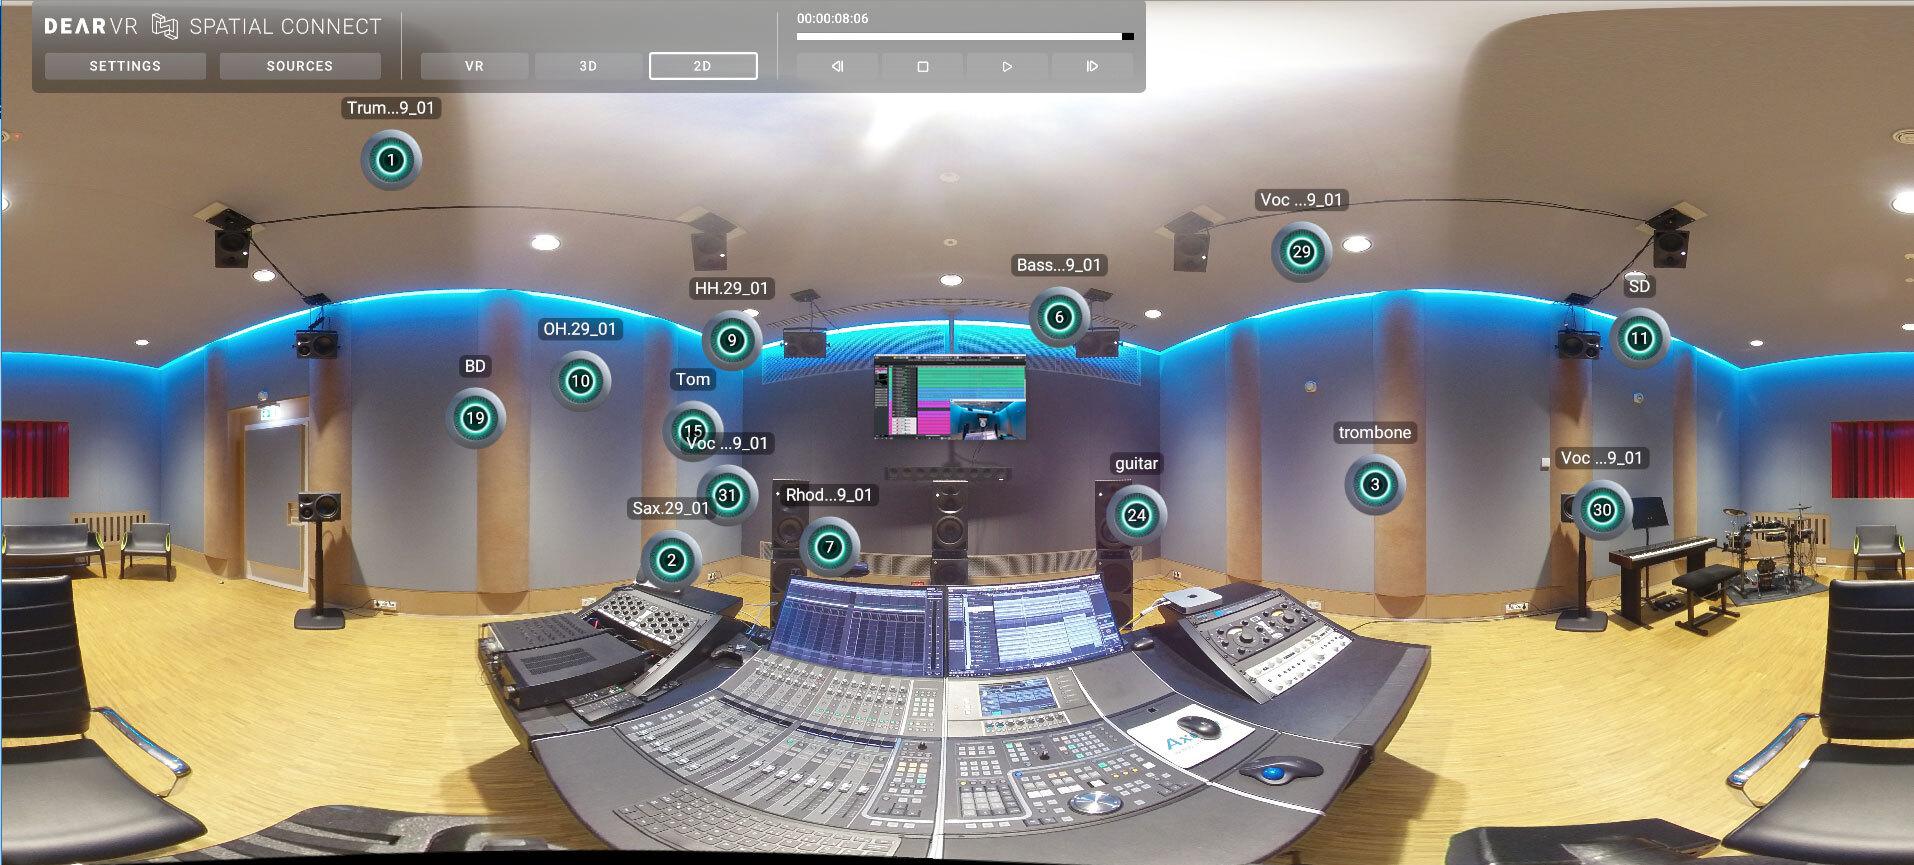 dearVR SPATIAL CONNECT通过在VR环境中能够模拟音频布局，提供空间音频会话的全面视图